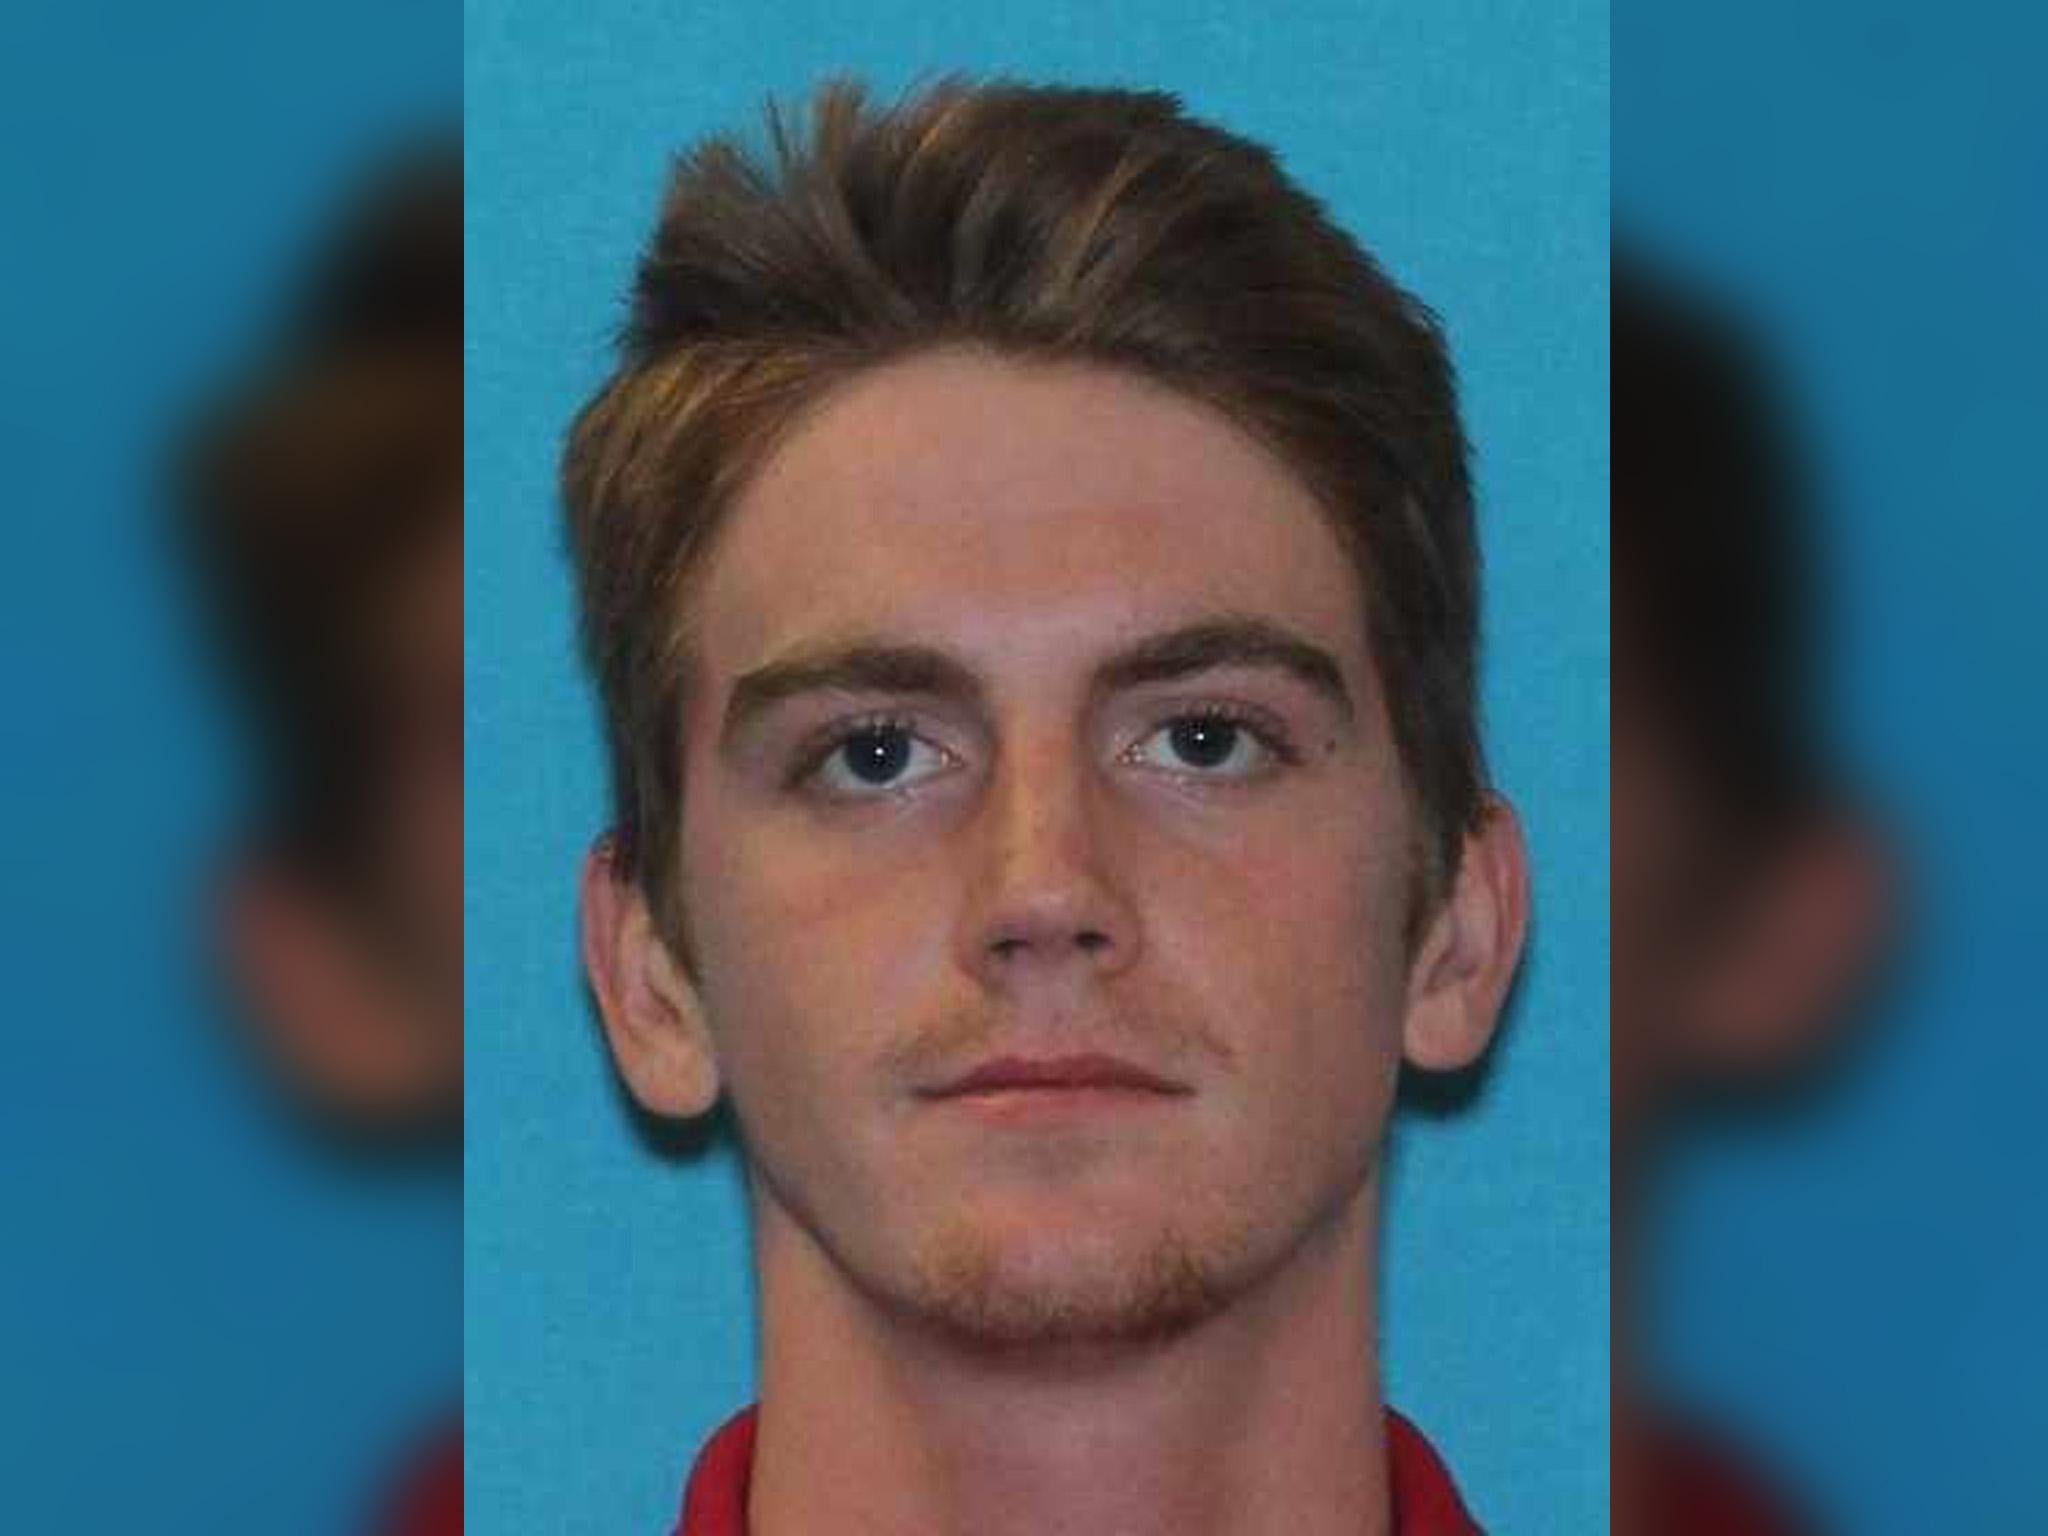 Suspect identified by university as Hollis A Daniels, 19